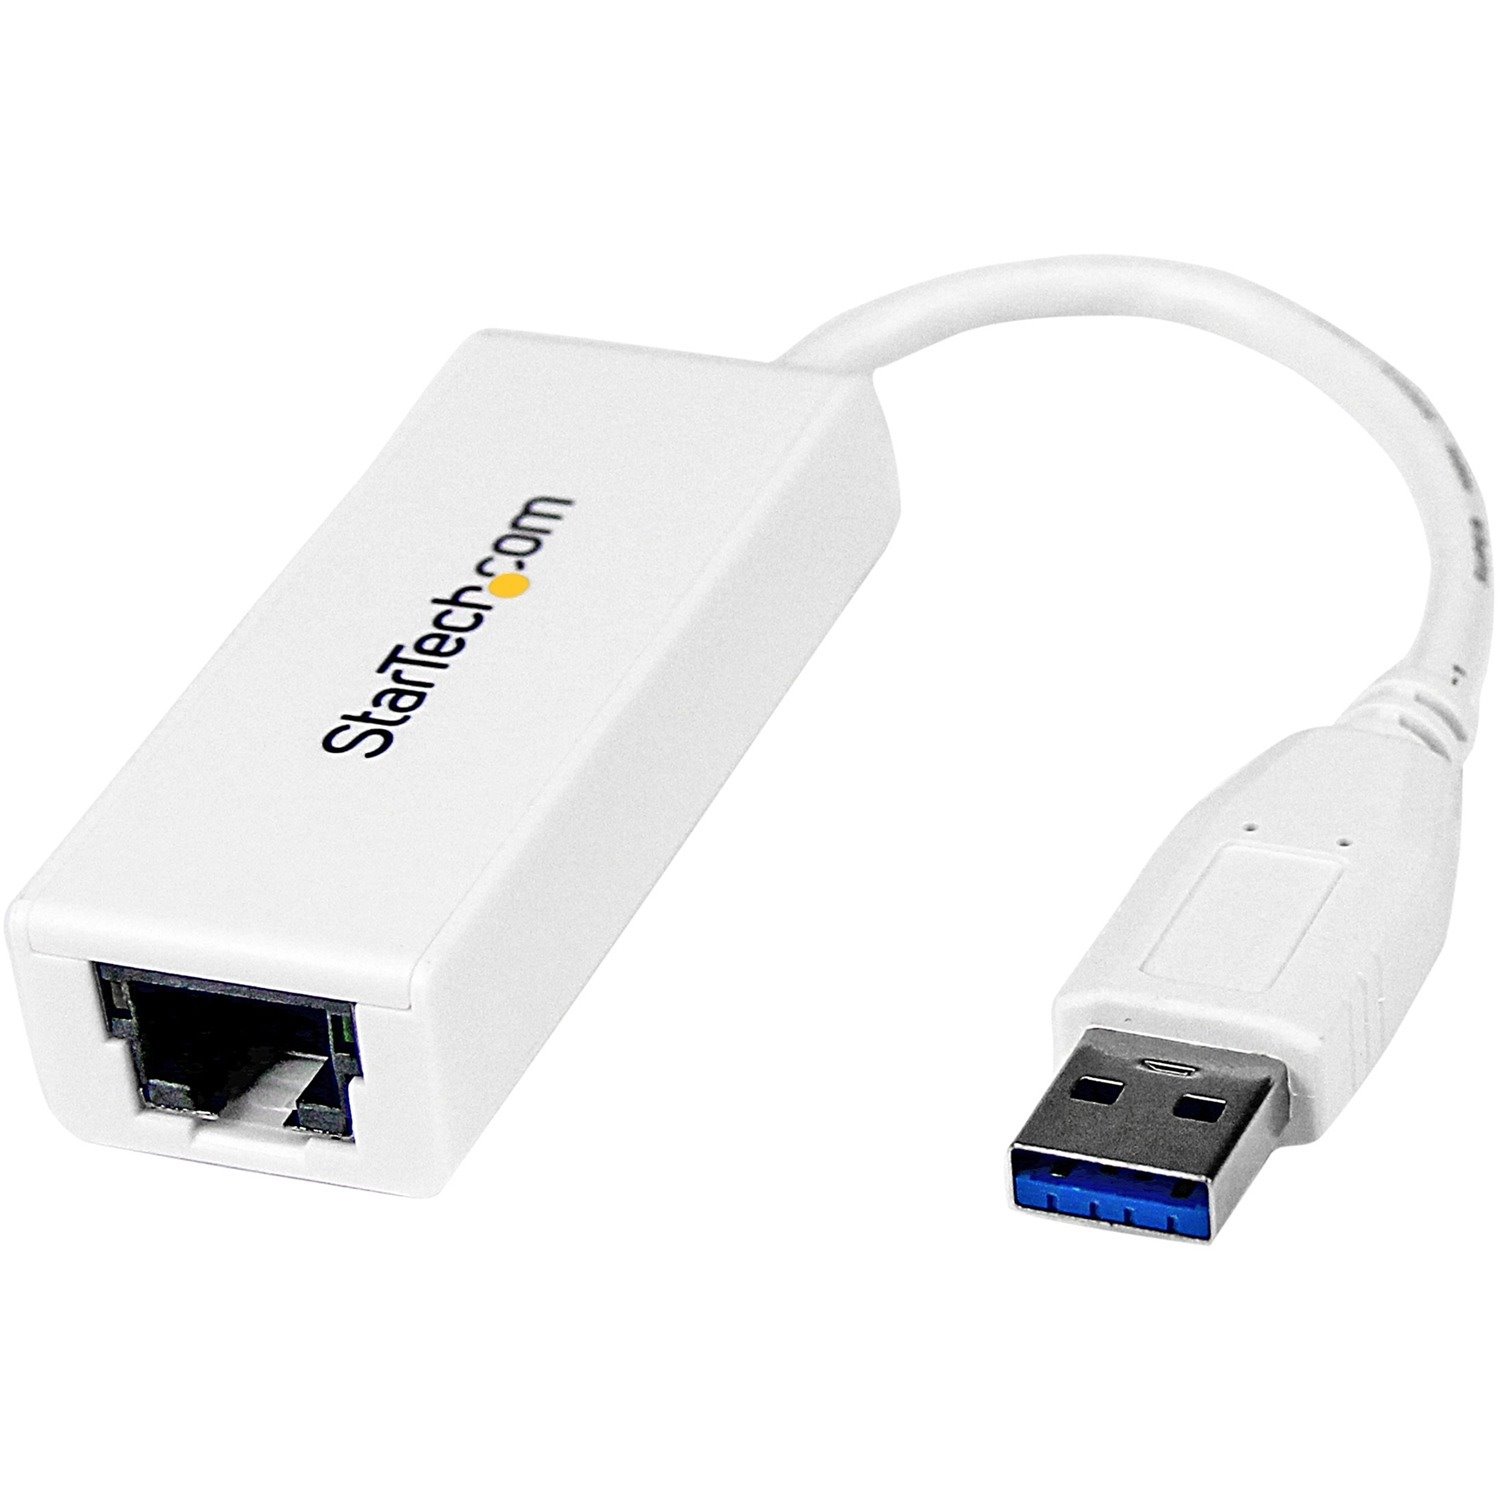 StarTech.com Gigabit Ethernet Card for PC - 10/100/1000Base-T - TAA Compliant